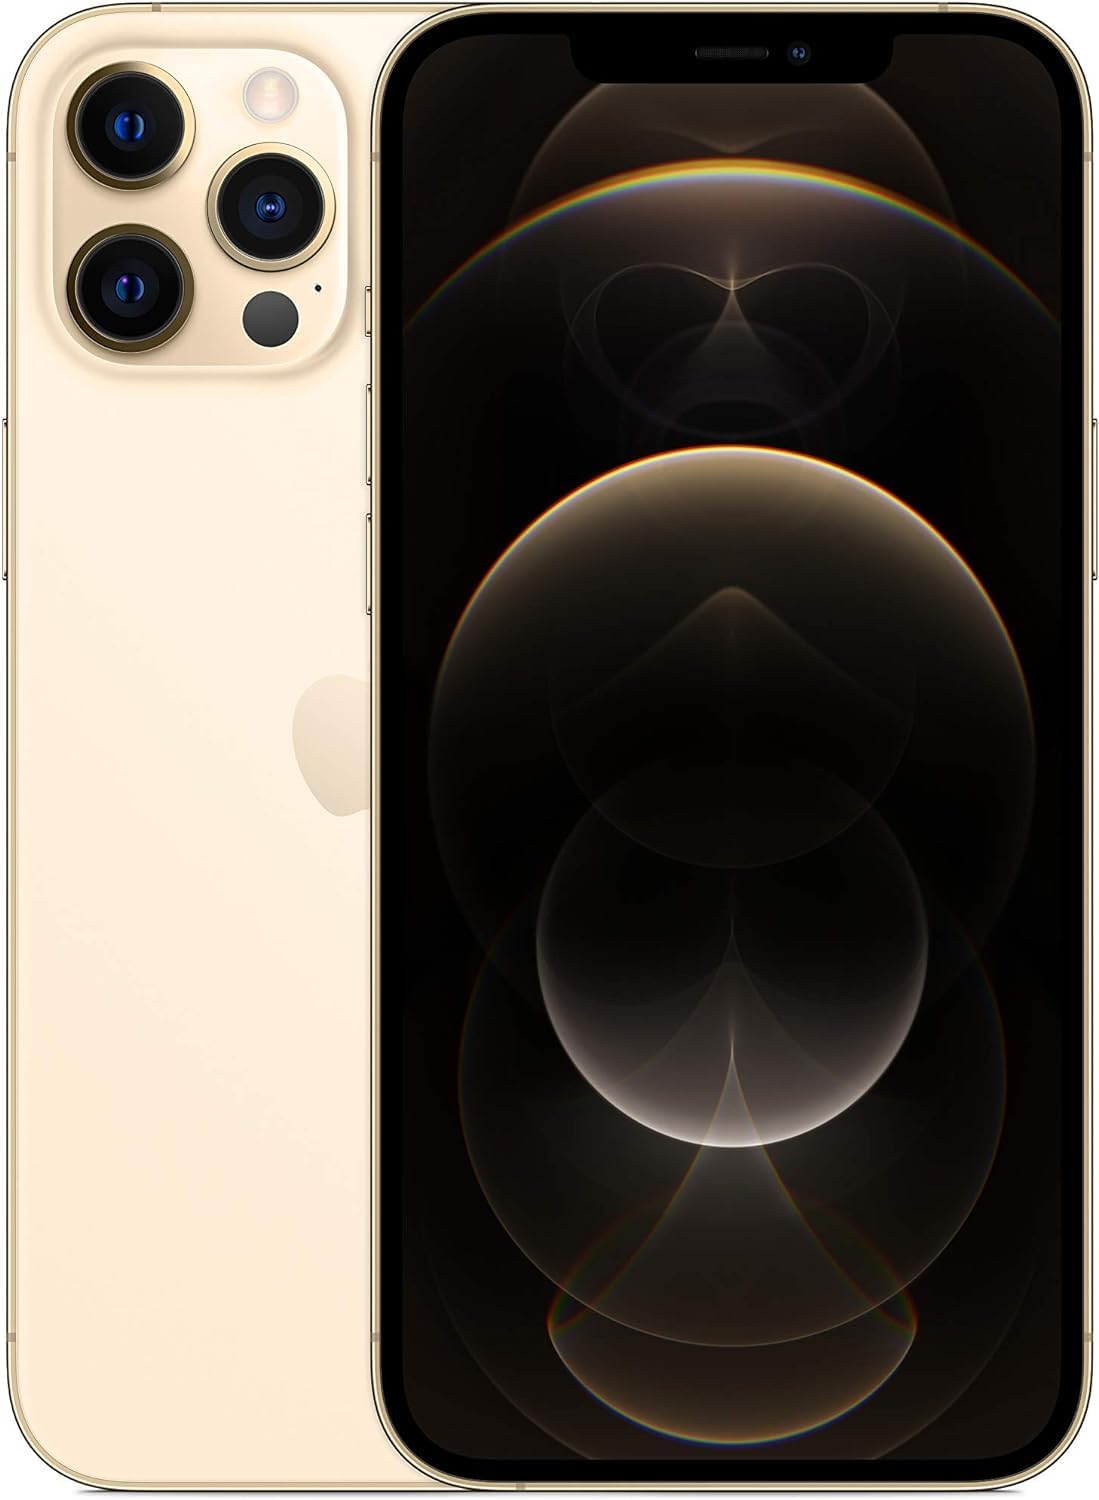 Apple iPhone 12 Pro (128GB) - Gold (Renewed)